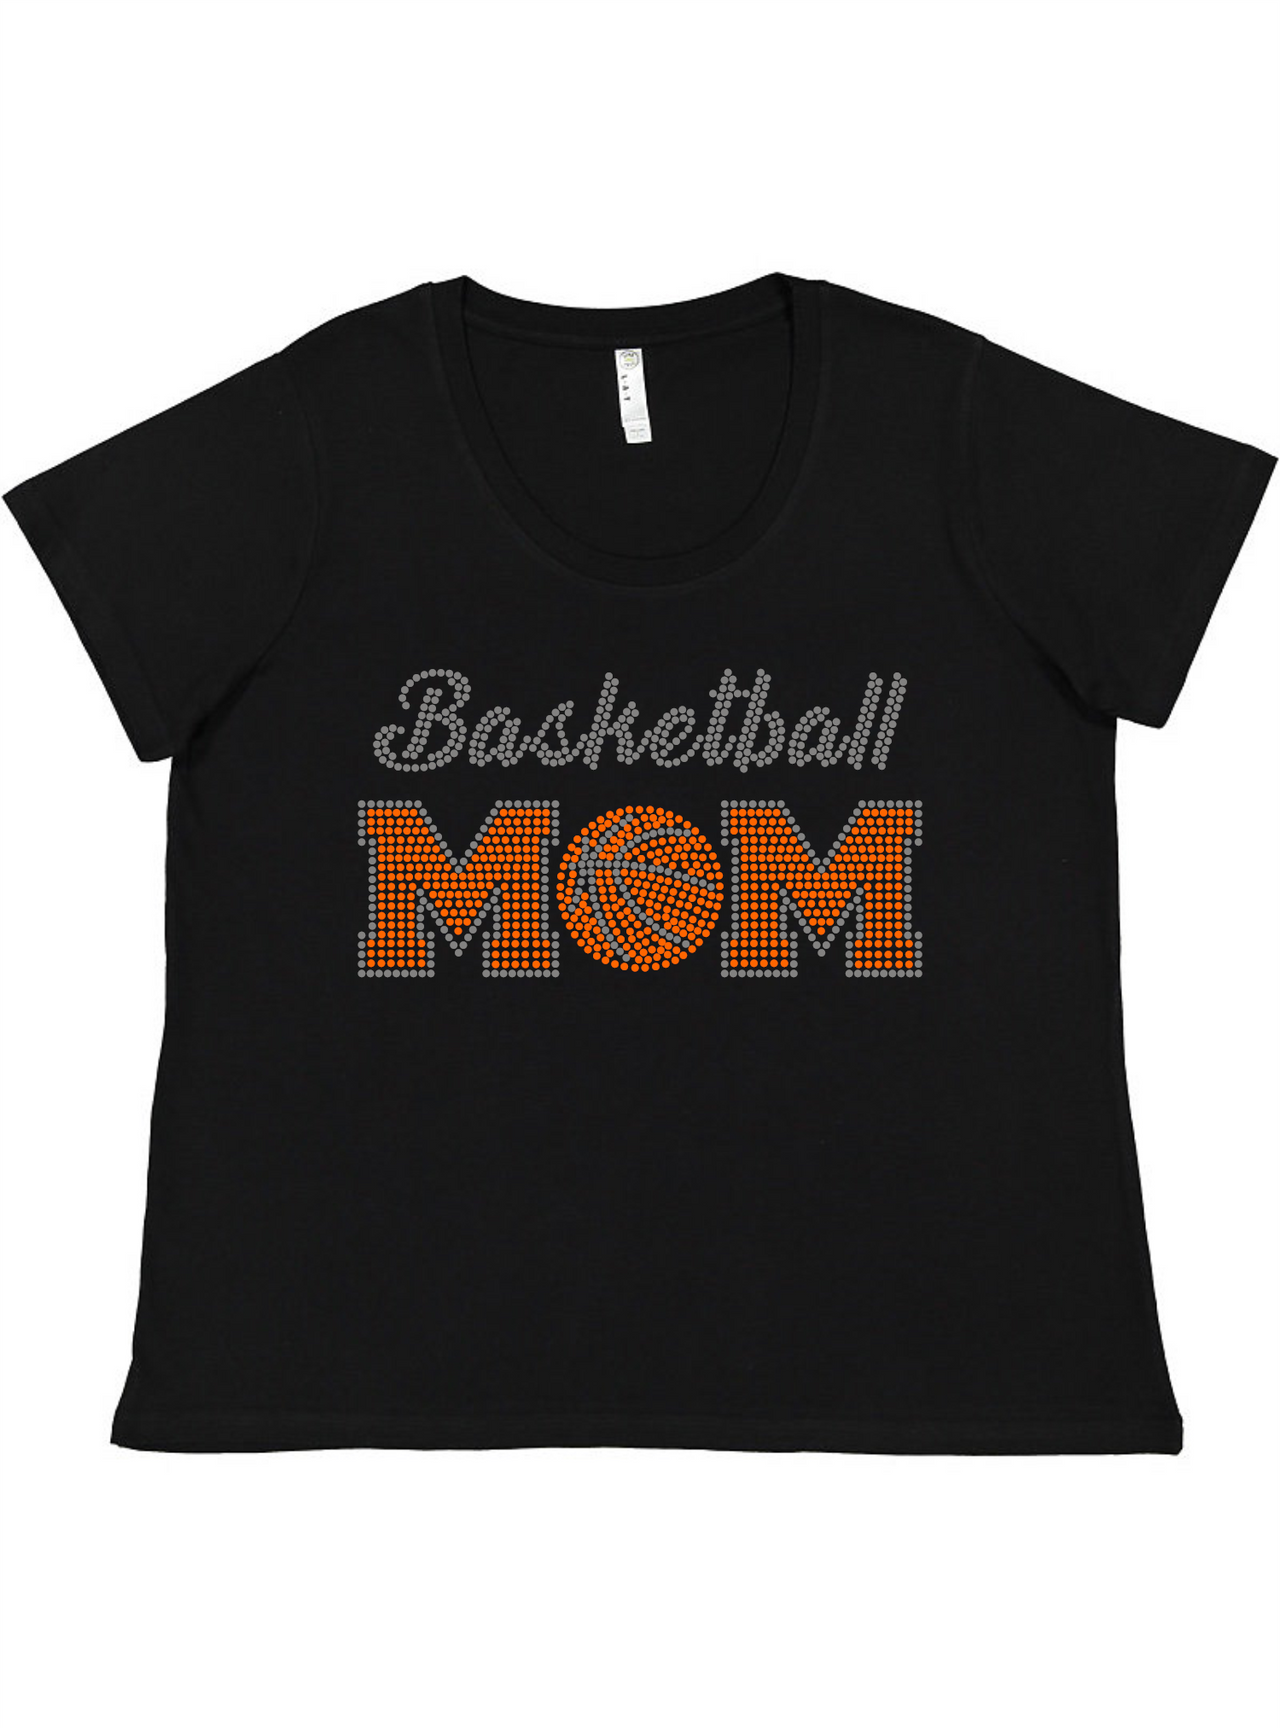 Basketball Mom Ladies Tee Ladies Shirt by Akron Pride Custom Tees | Akron Pride Custom Tees